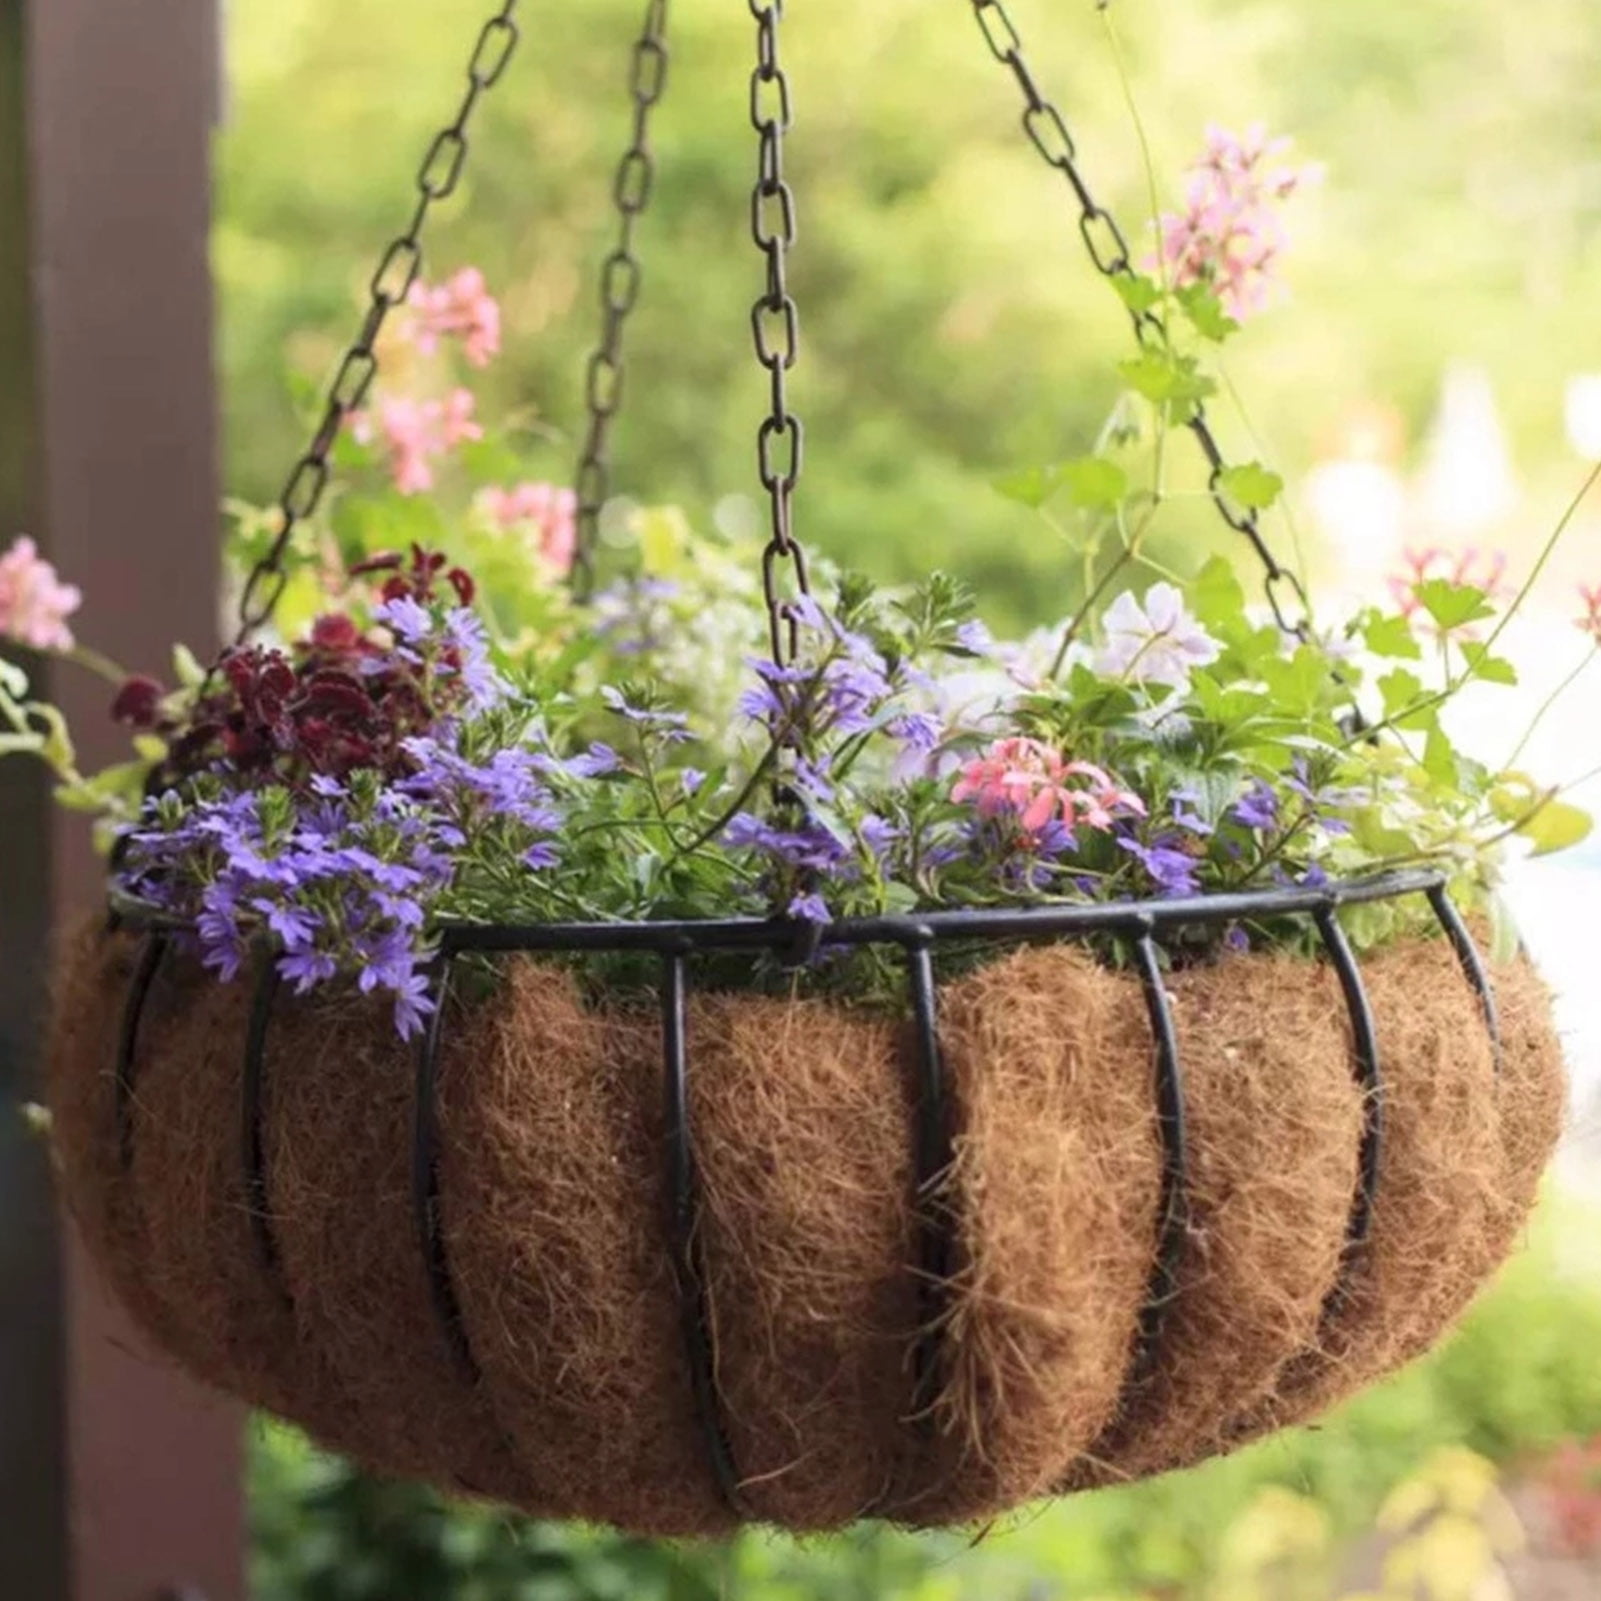 Details about   2pcs Hanging Basket Plant Pots Garden Yard Flowers Planter With Hook Plastic New 